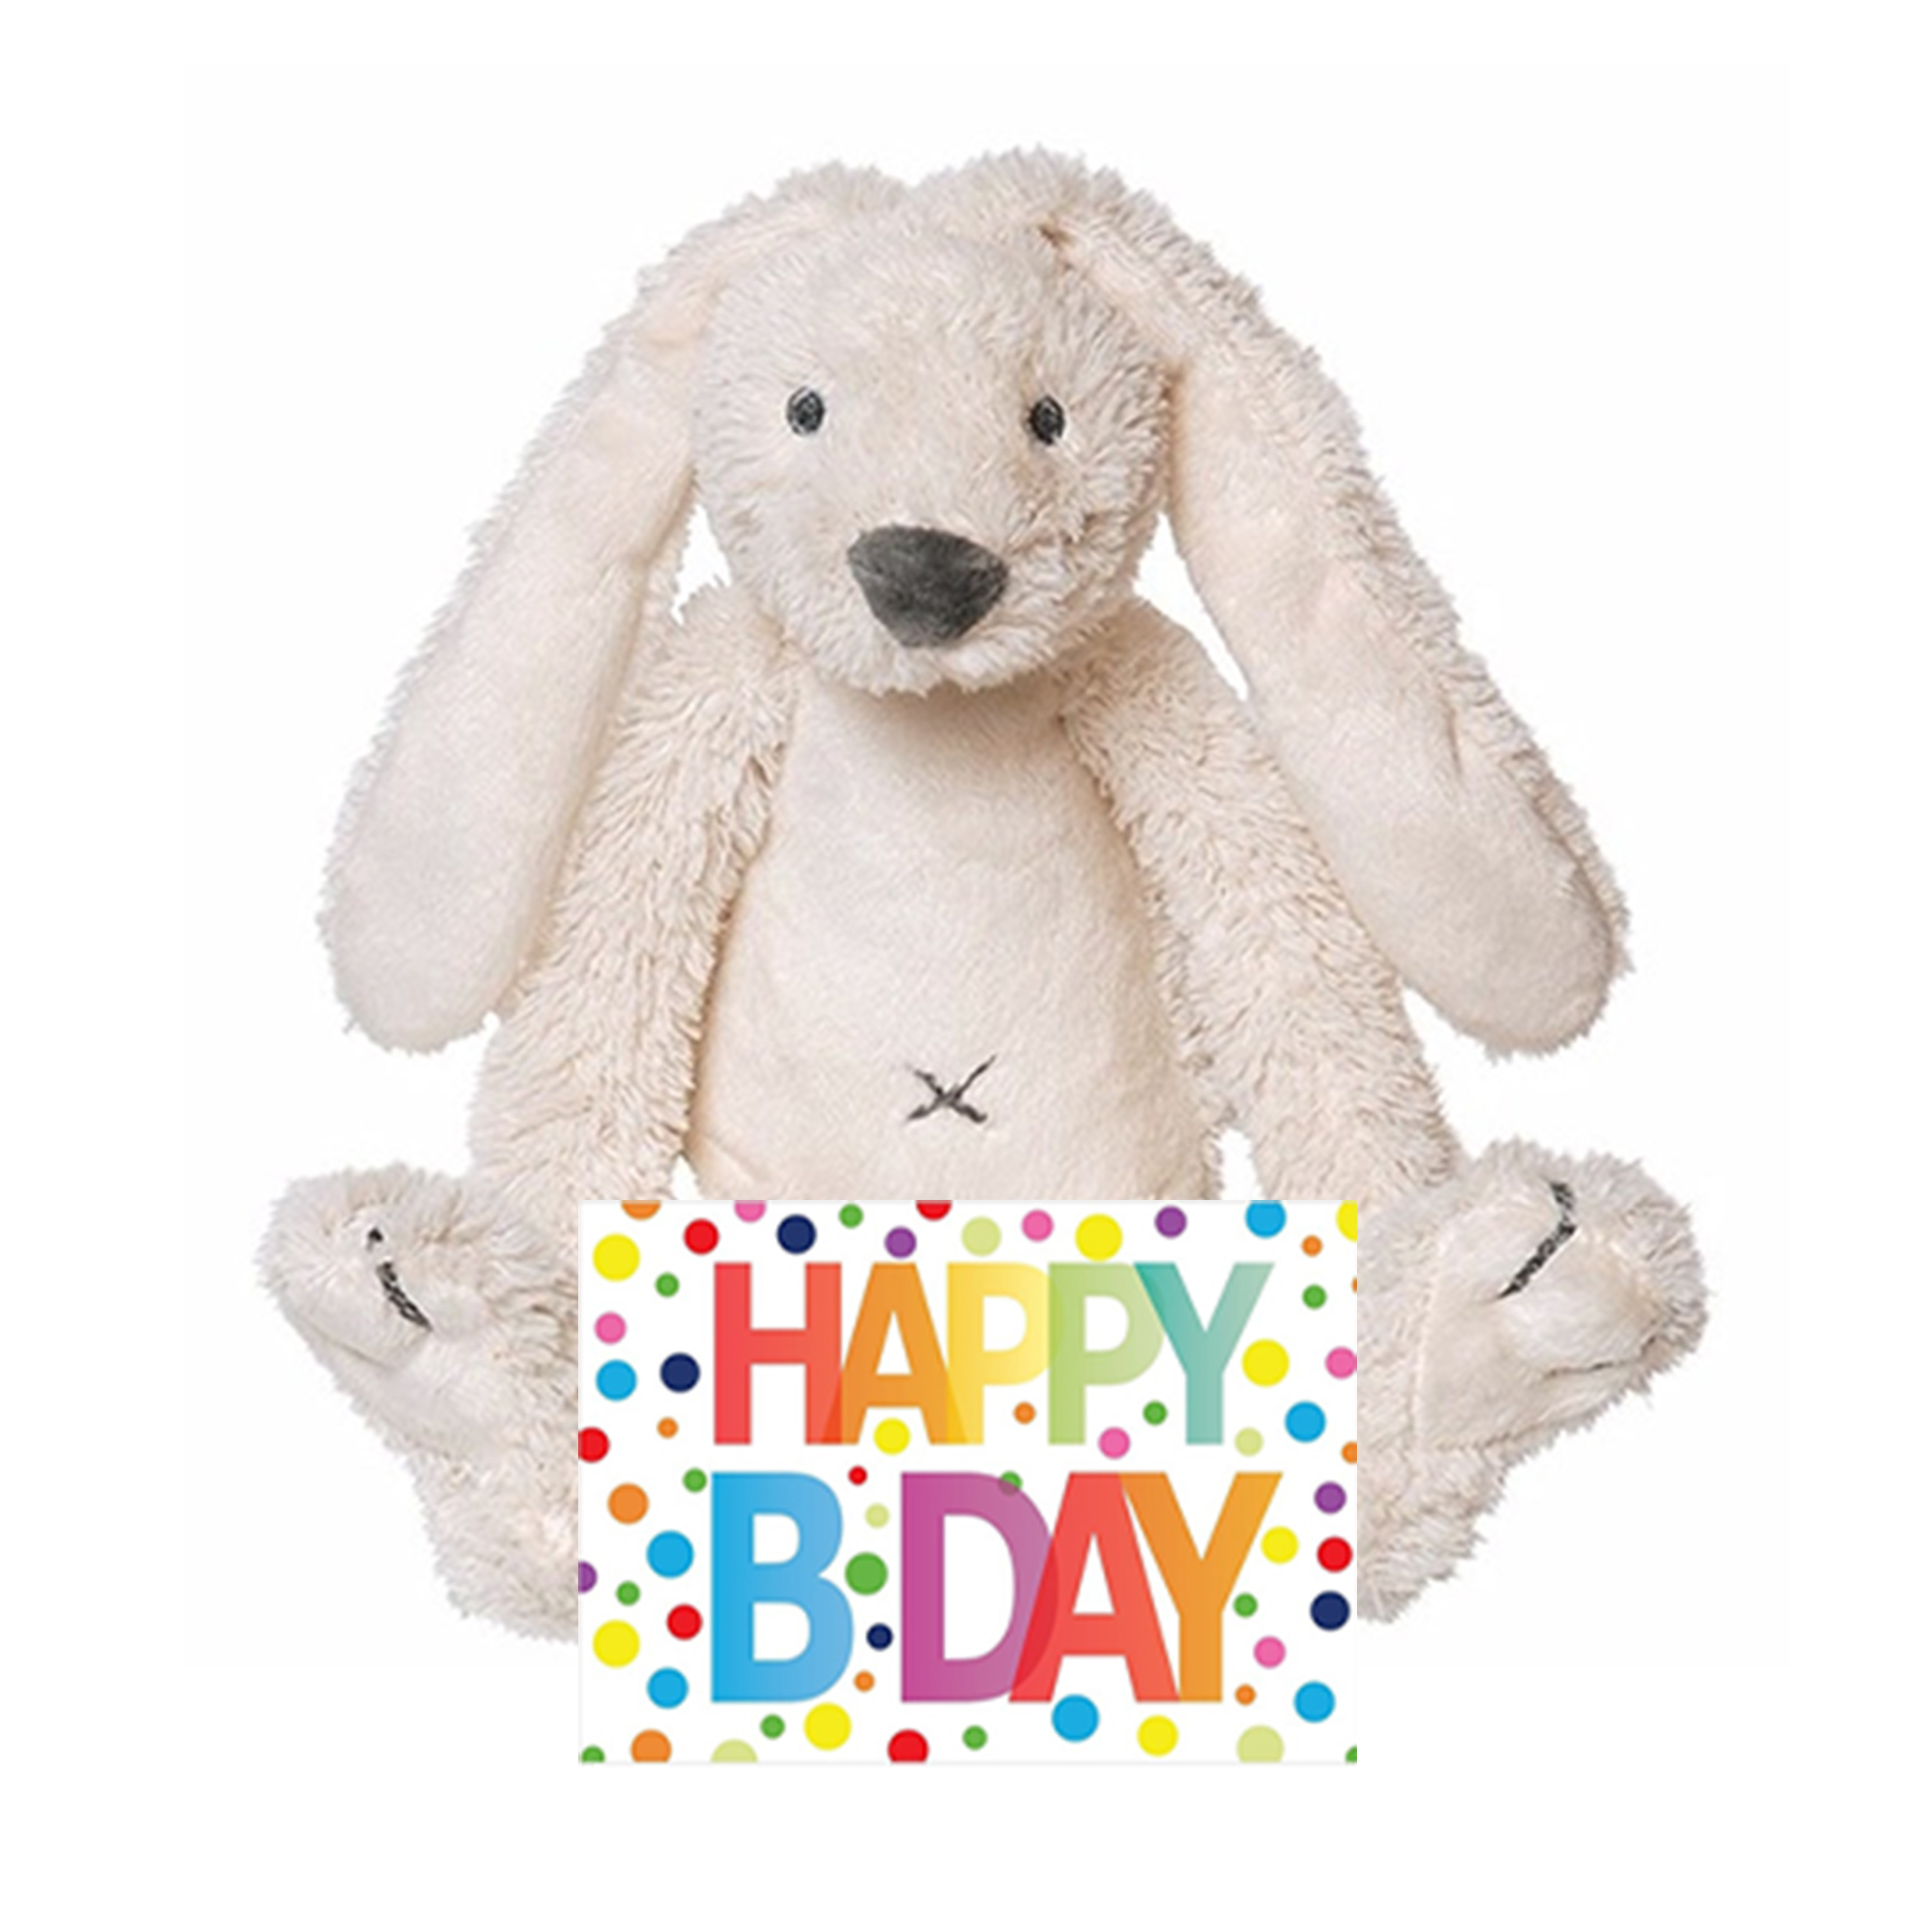 Kinder cadeau knuffel konijn met Happy birthday wenskaart -